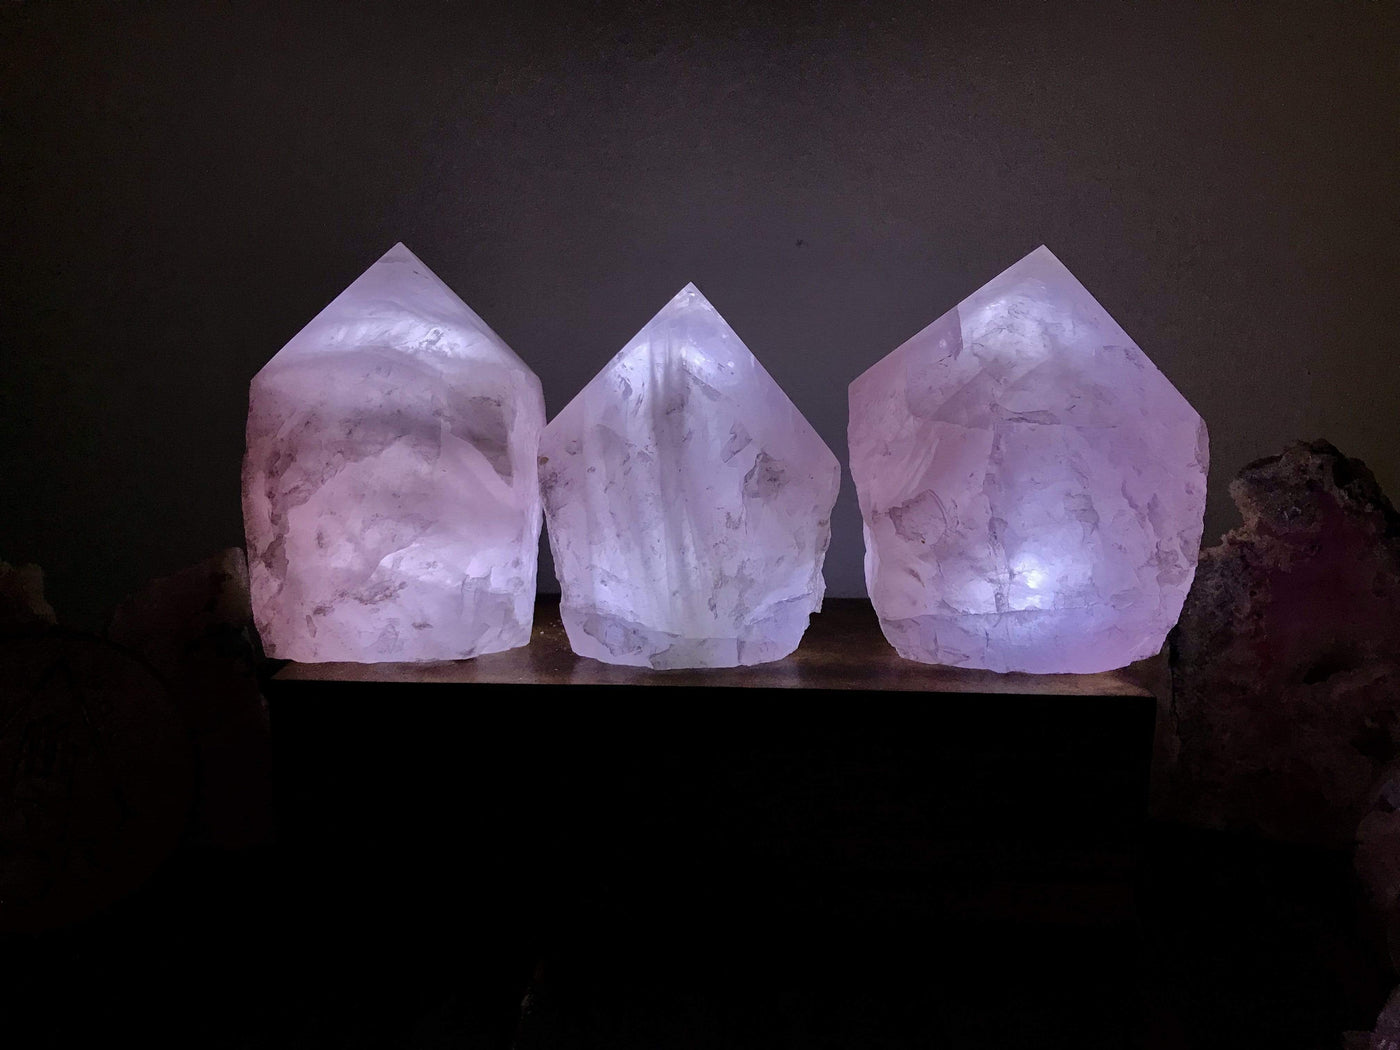 3 Rose Qartz Lamps lit up in a dark room